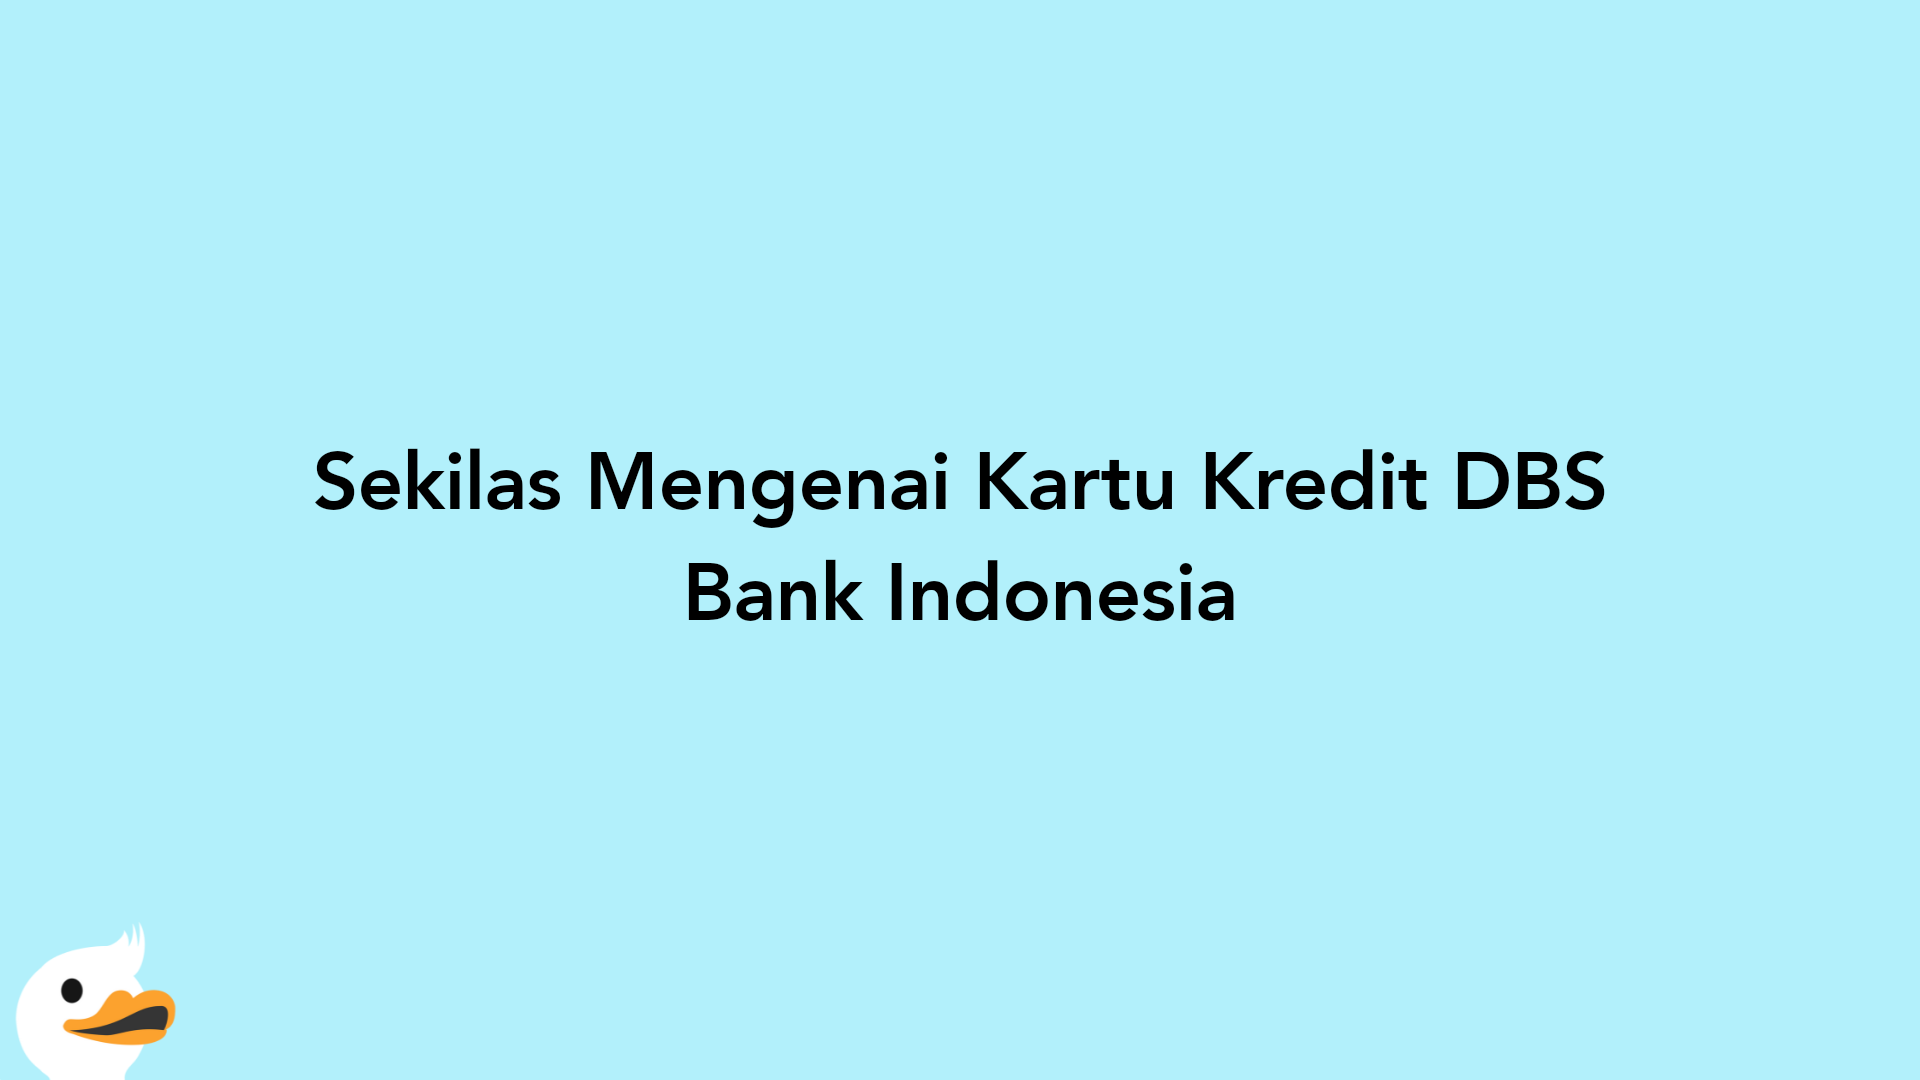 Sekilas Mengenai Kartu Kredit DBS Bank Indonesia